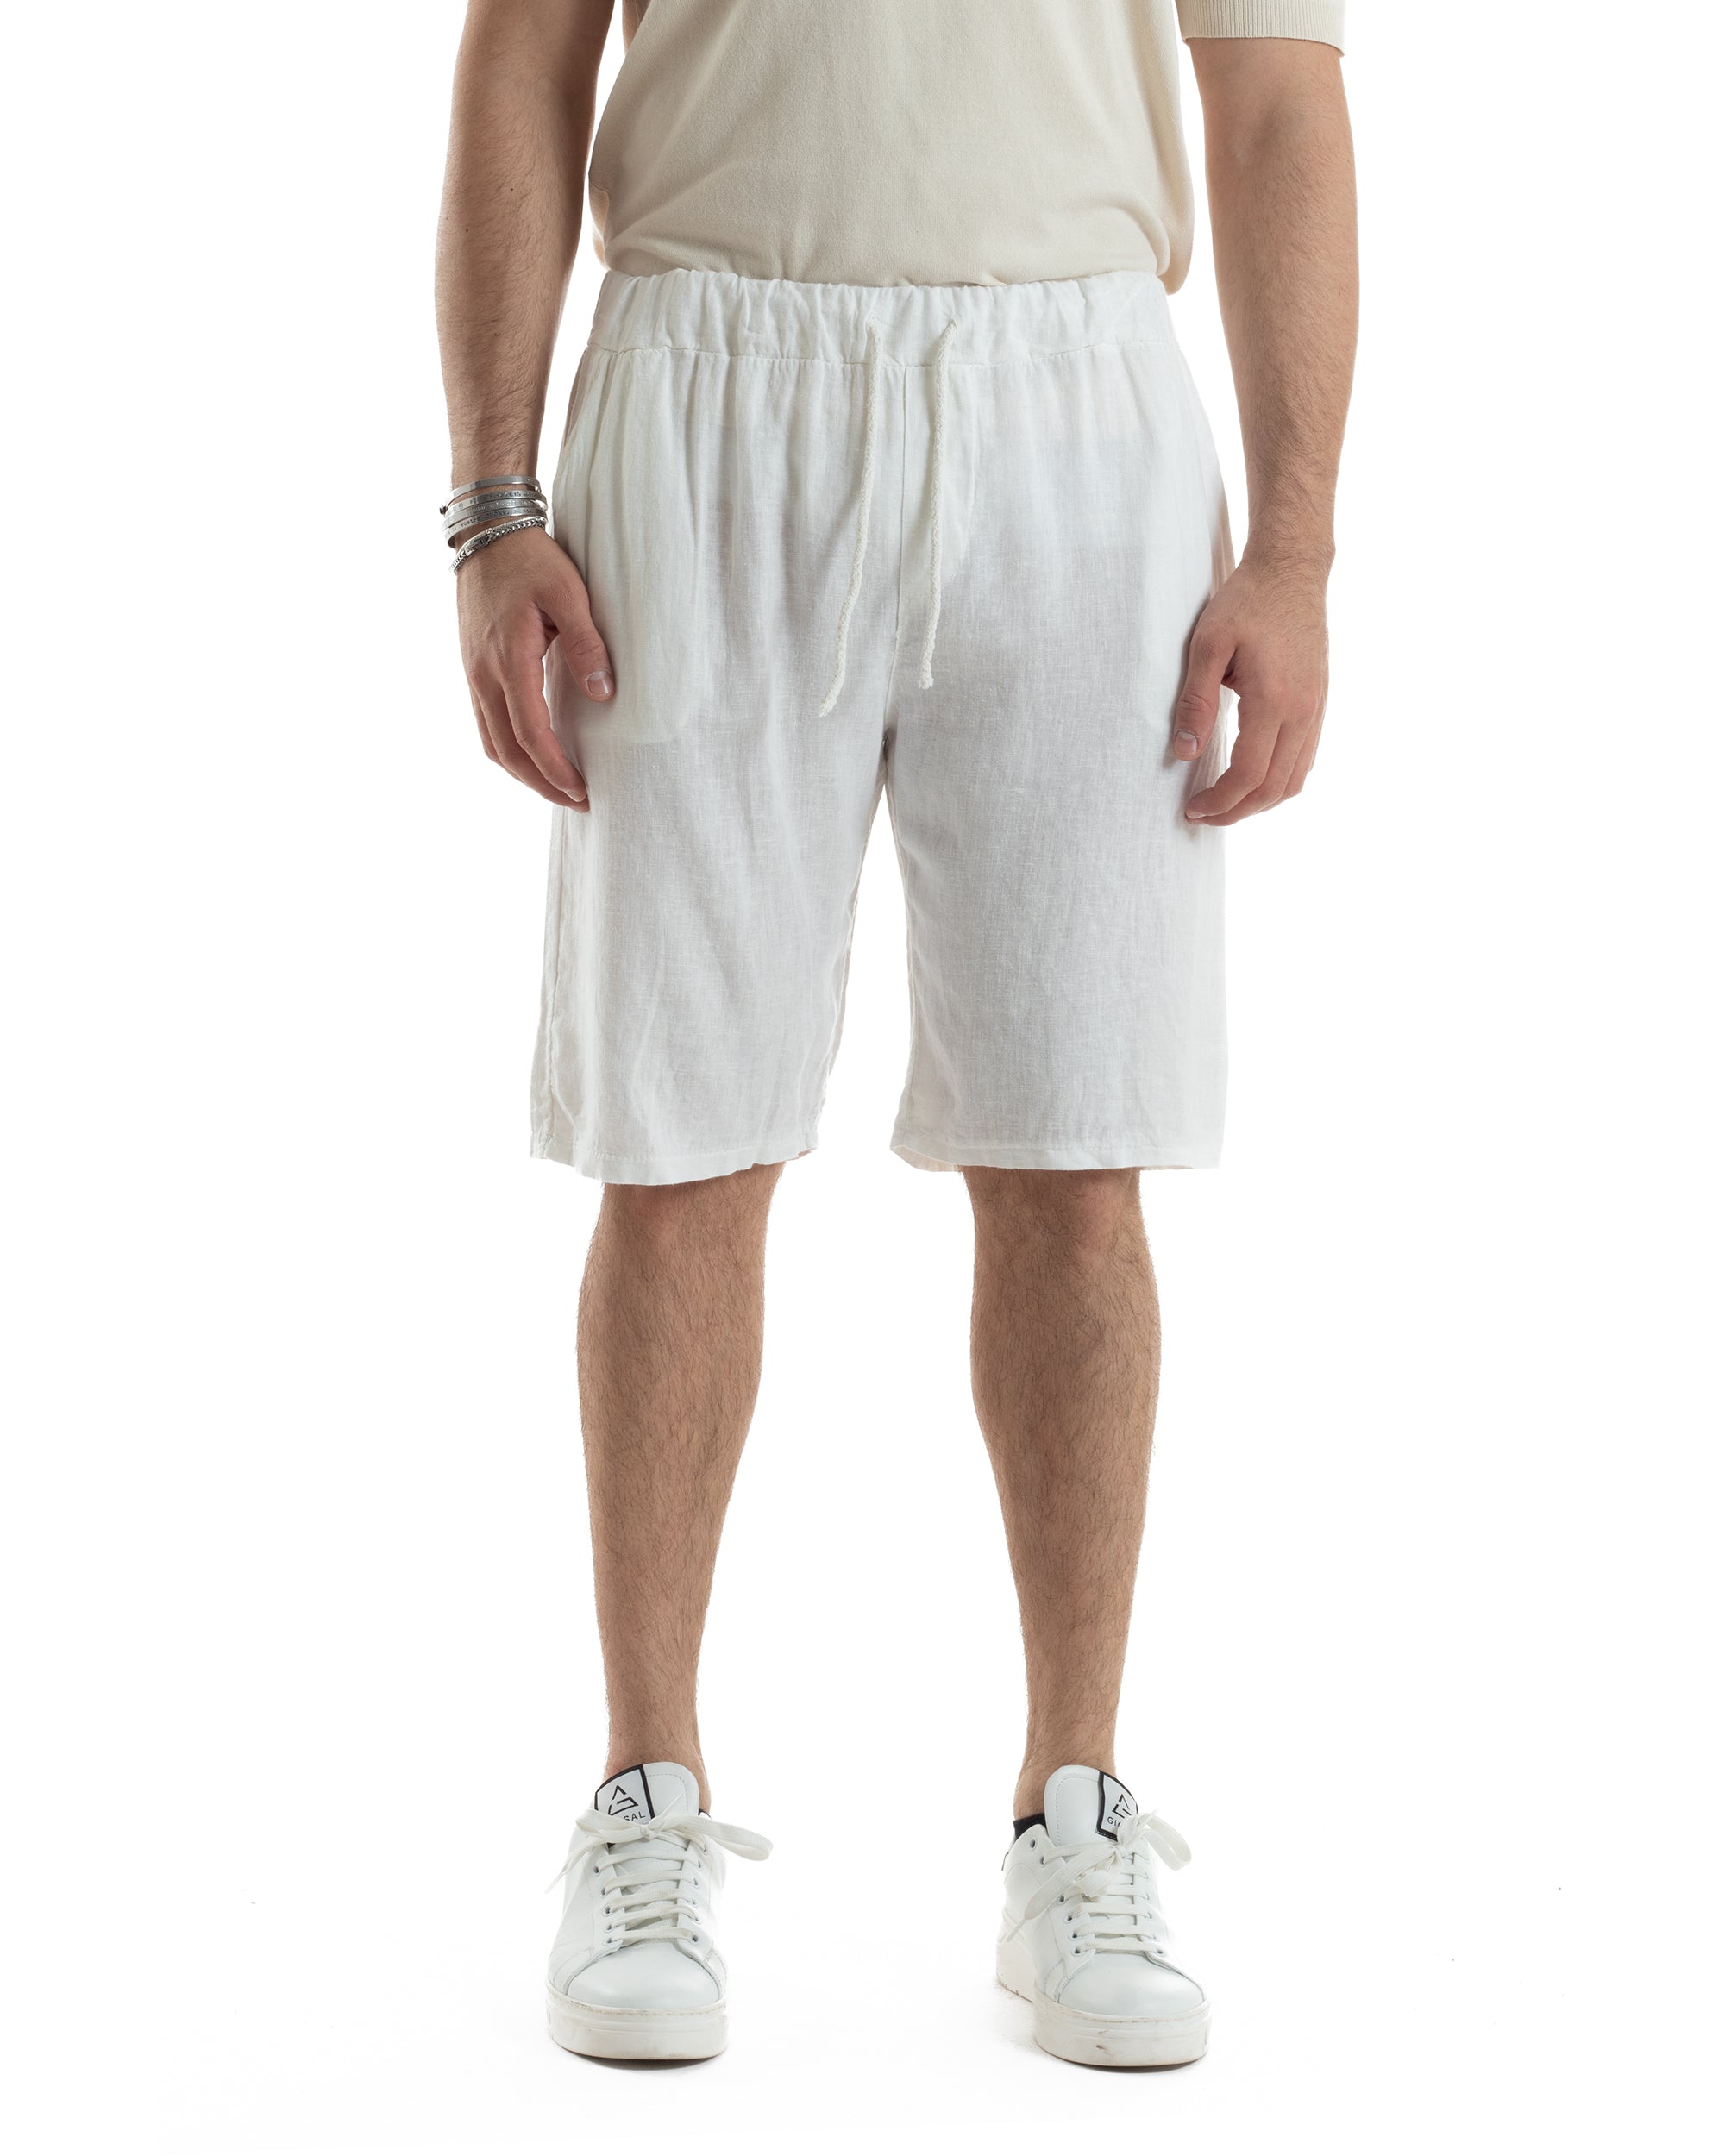 Bermuda Pantaloncino Uomo Corto Lino Jogger Basic Tinta Unita Bianco GIOSAL-PC1945A